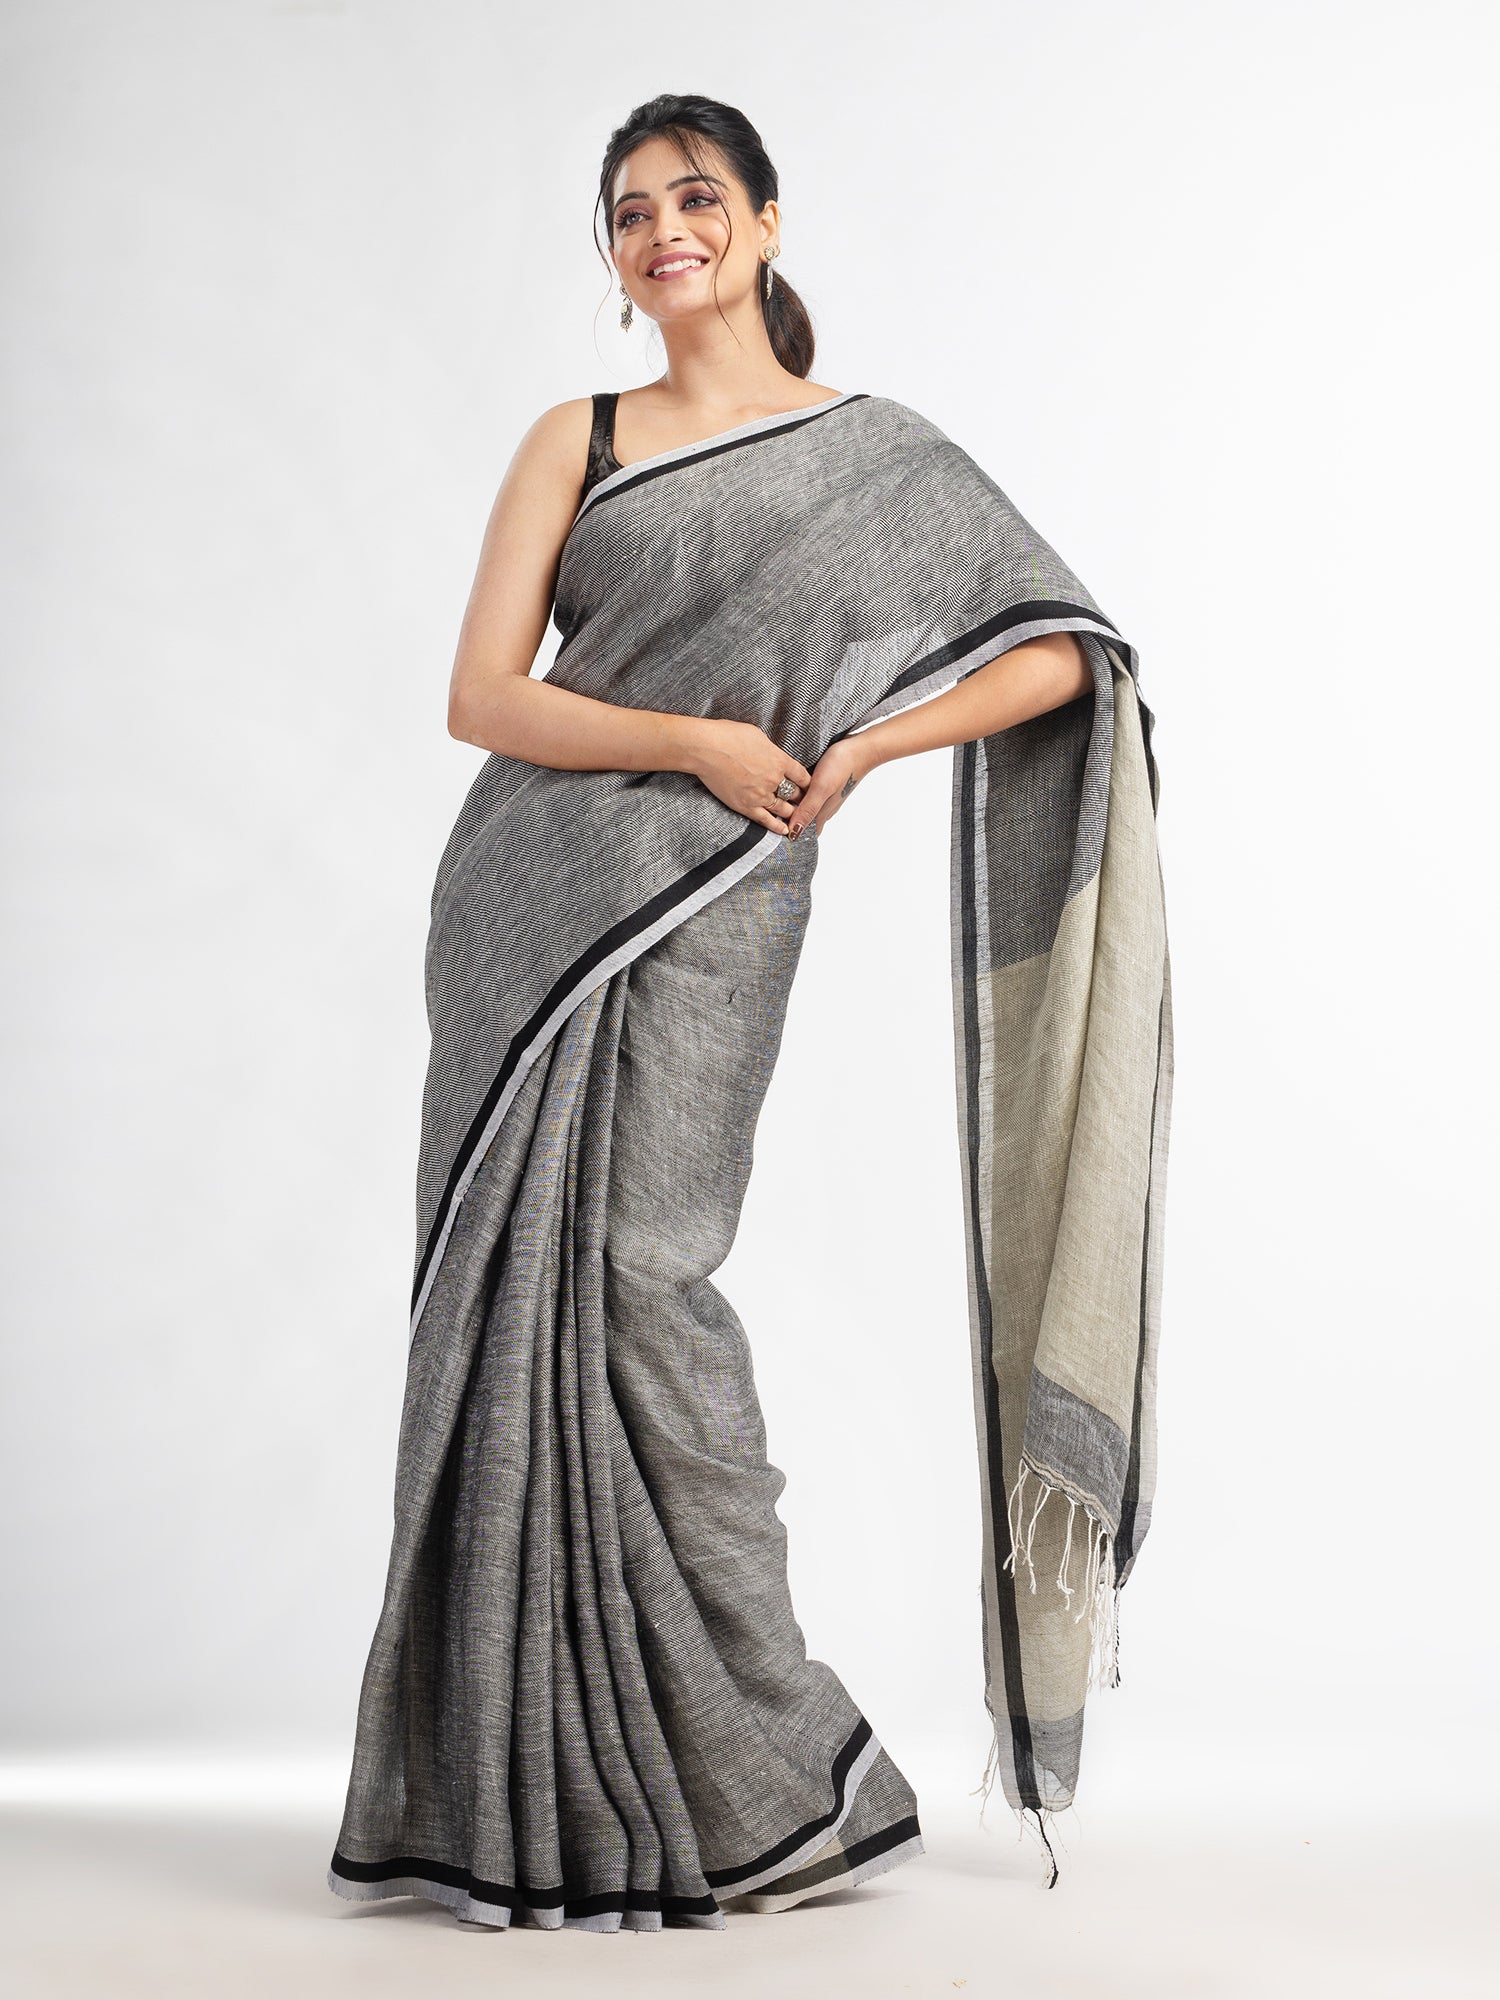 Women's Grey twill weaving with sage green pallu in white and black border handwoven linen saree - Angoshobha